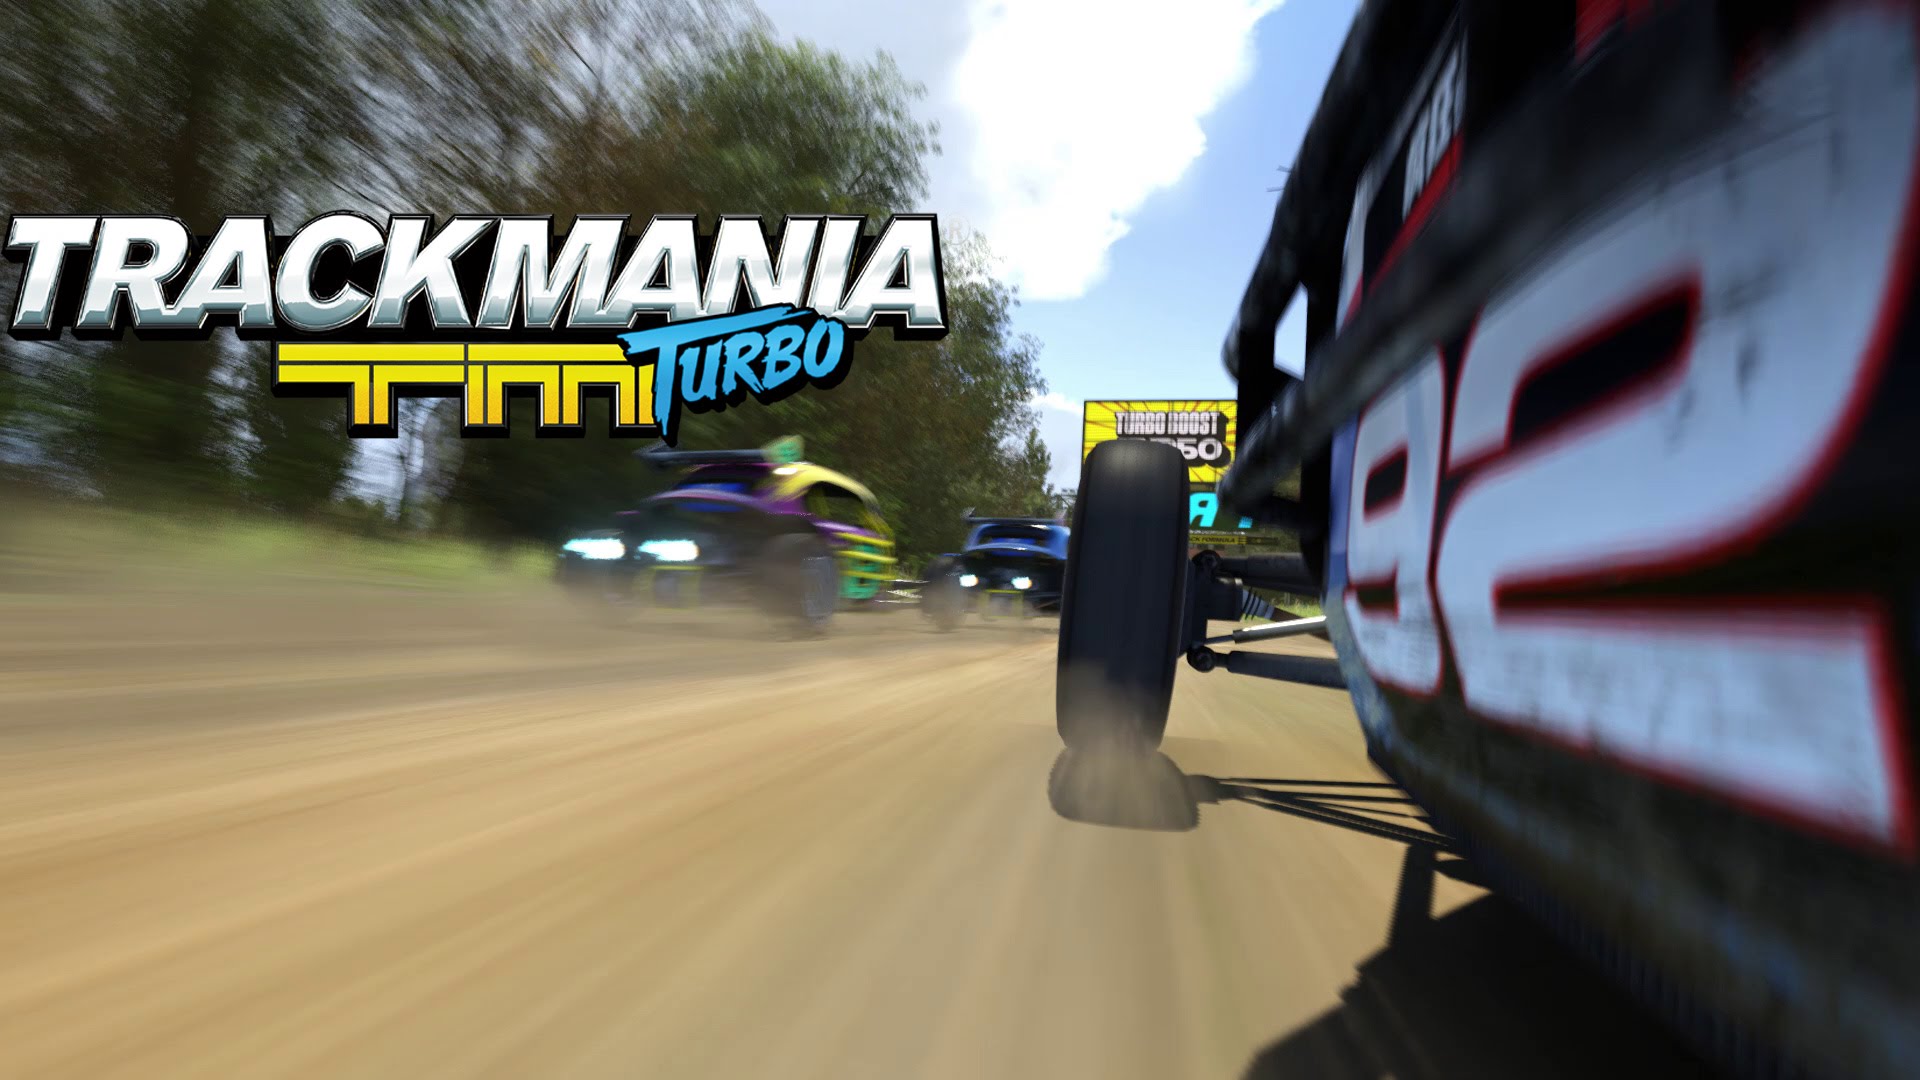 Trackmania Turbo - Trial Trailer